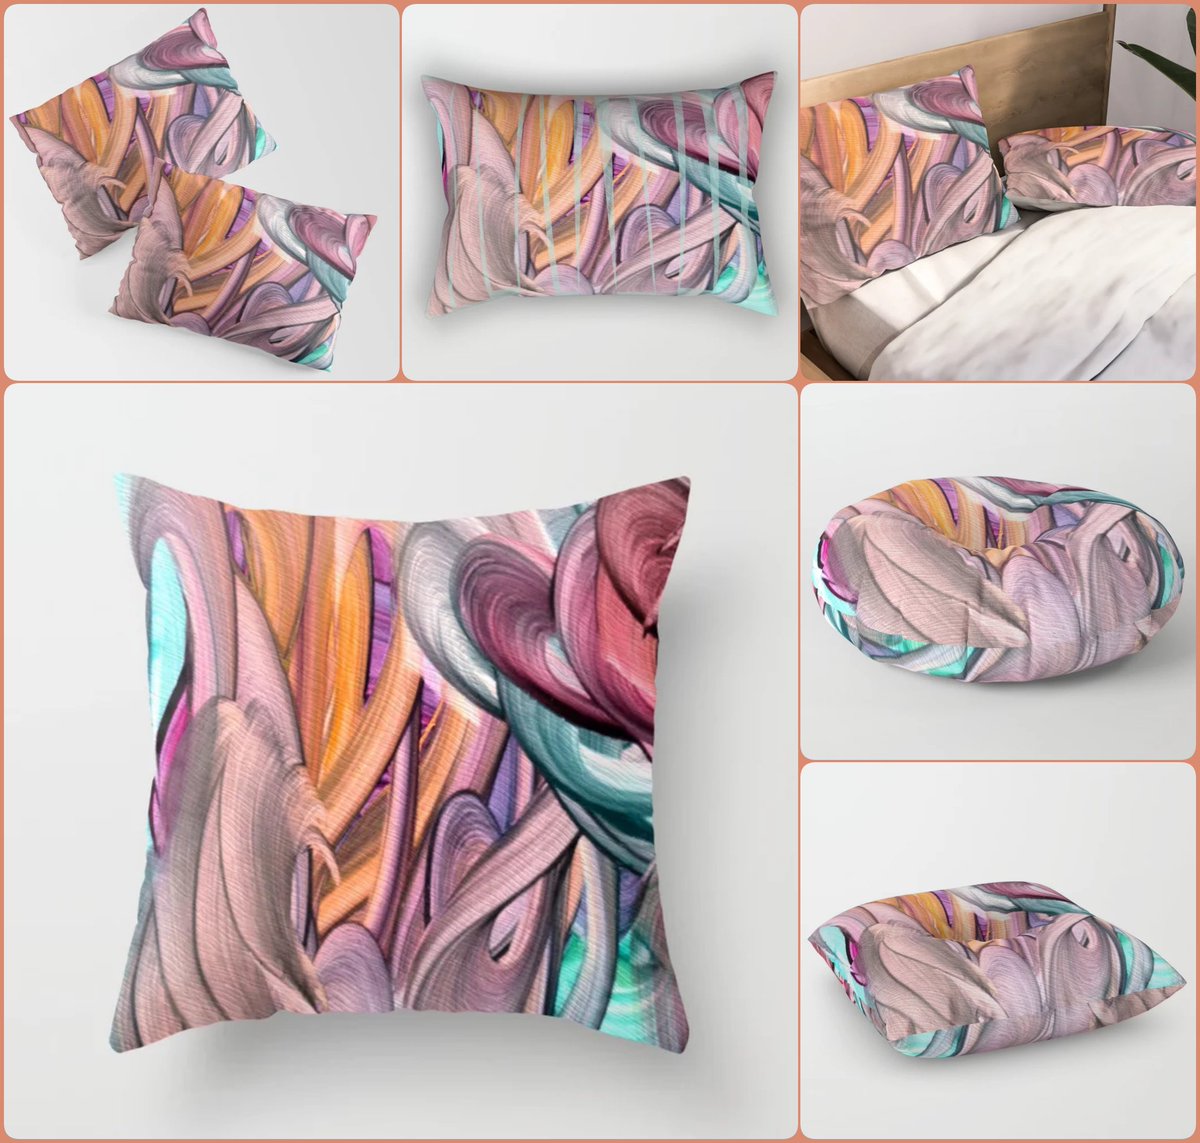 Achaman Throw Pillow~by Art Falaxy~
~Unique Pillows!~
#artfalaxy #art #bedroom #pillows #homedecor #society6 #Society6max #swirls #modern #trendy #accessories #accents #floorpillows #pillows #shams #blankets

society6.com/product/achama…
COLLECTION: society6.com/art/achaman?cu…